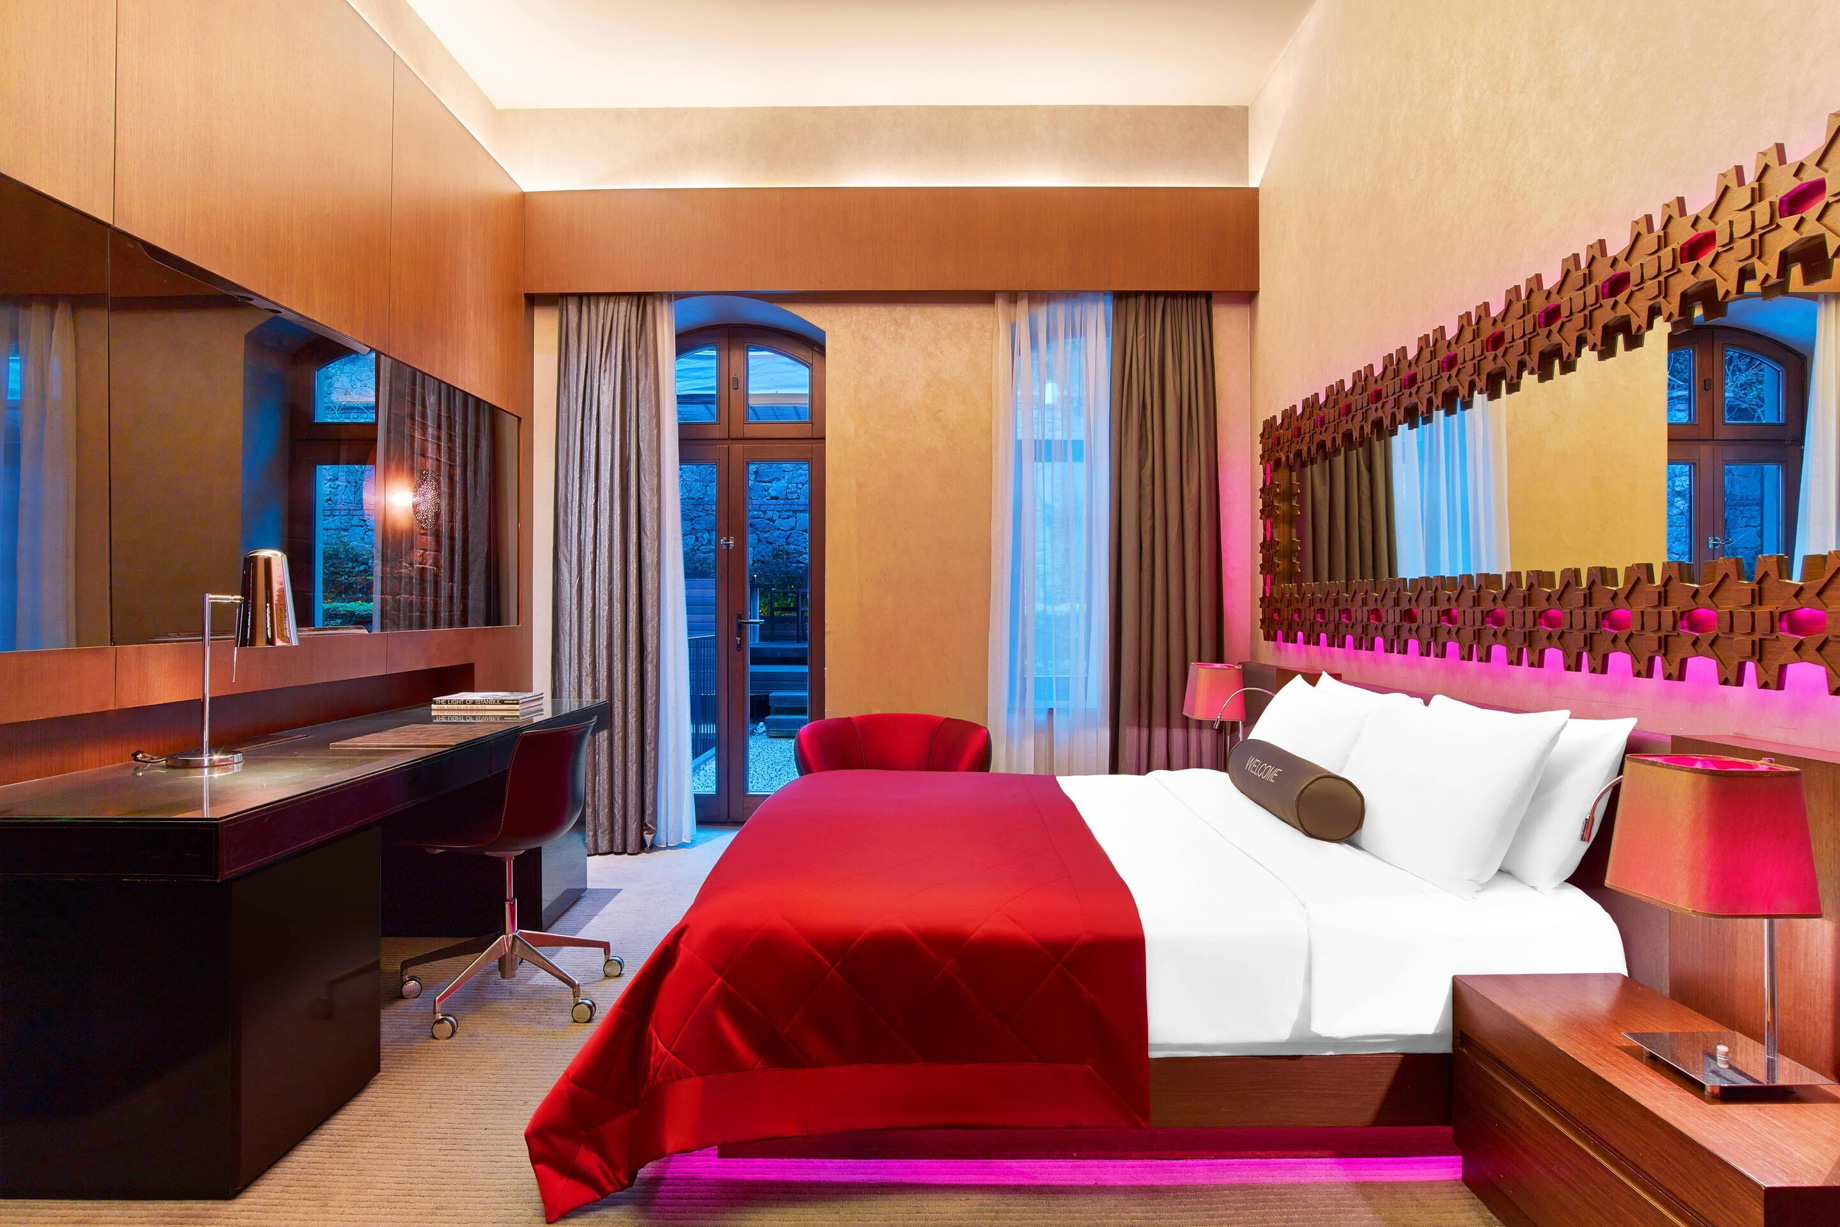 W Istanbul Hotel – Istanbul, Turkey – Marvelous Room